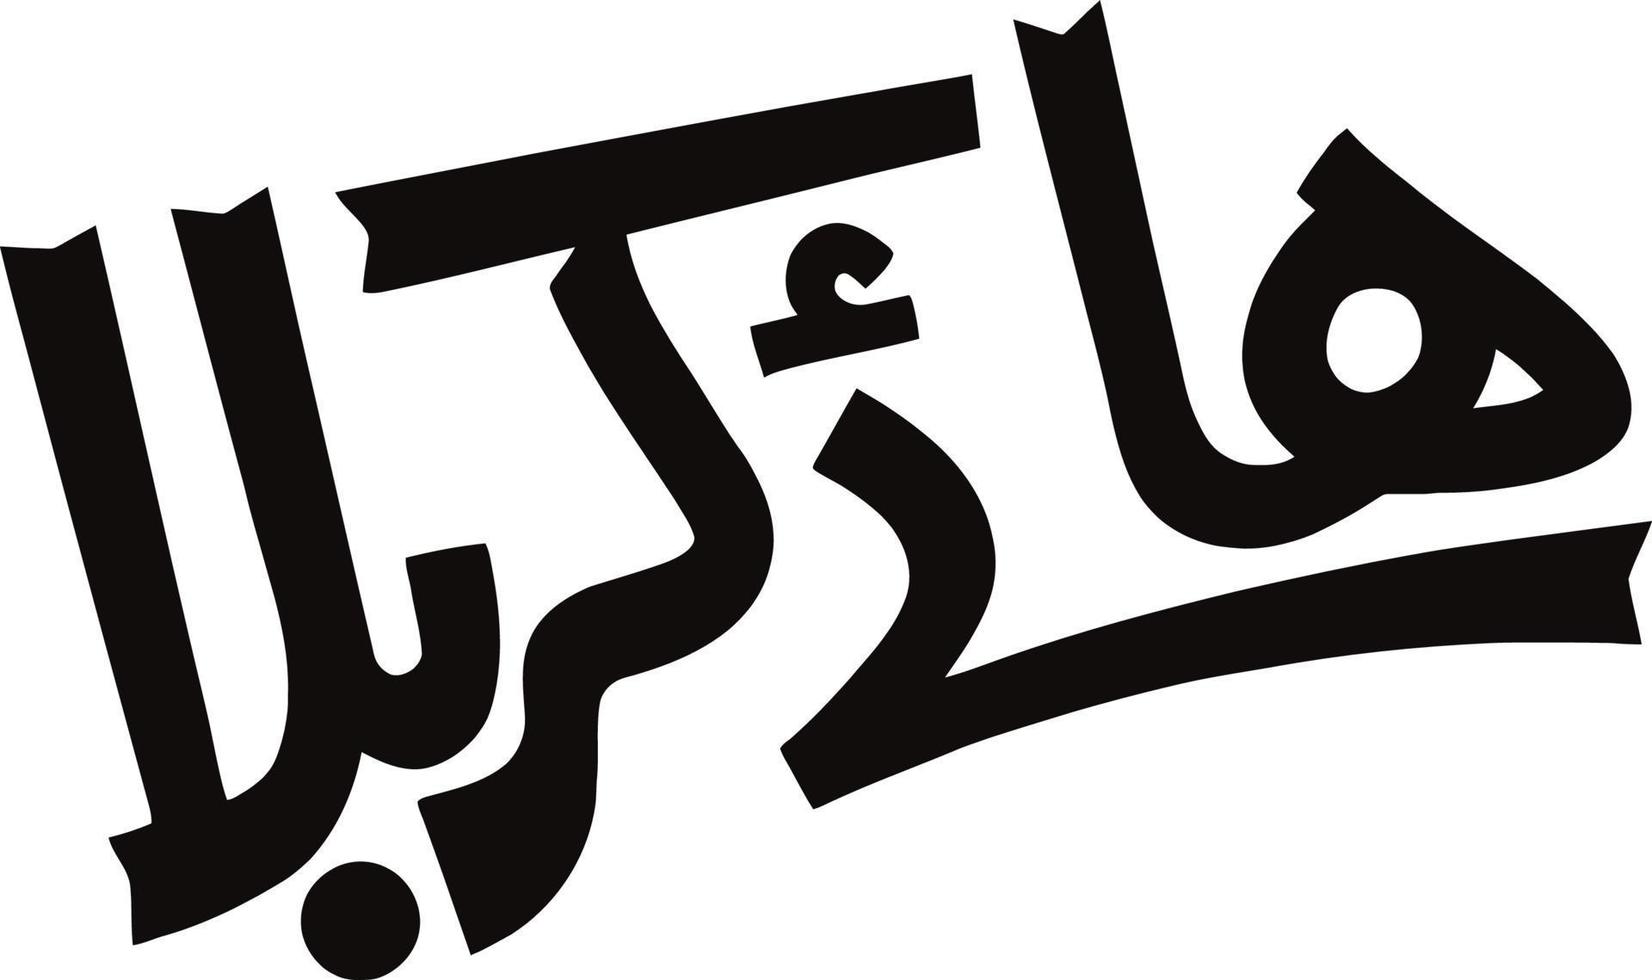 ehi krbla islamico urdu calligrafia gratuito vettore